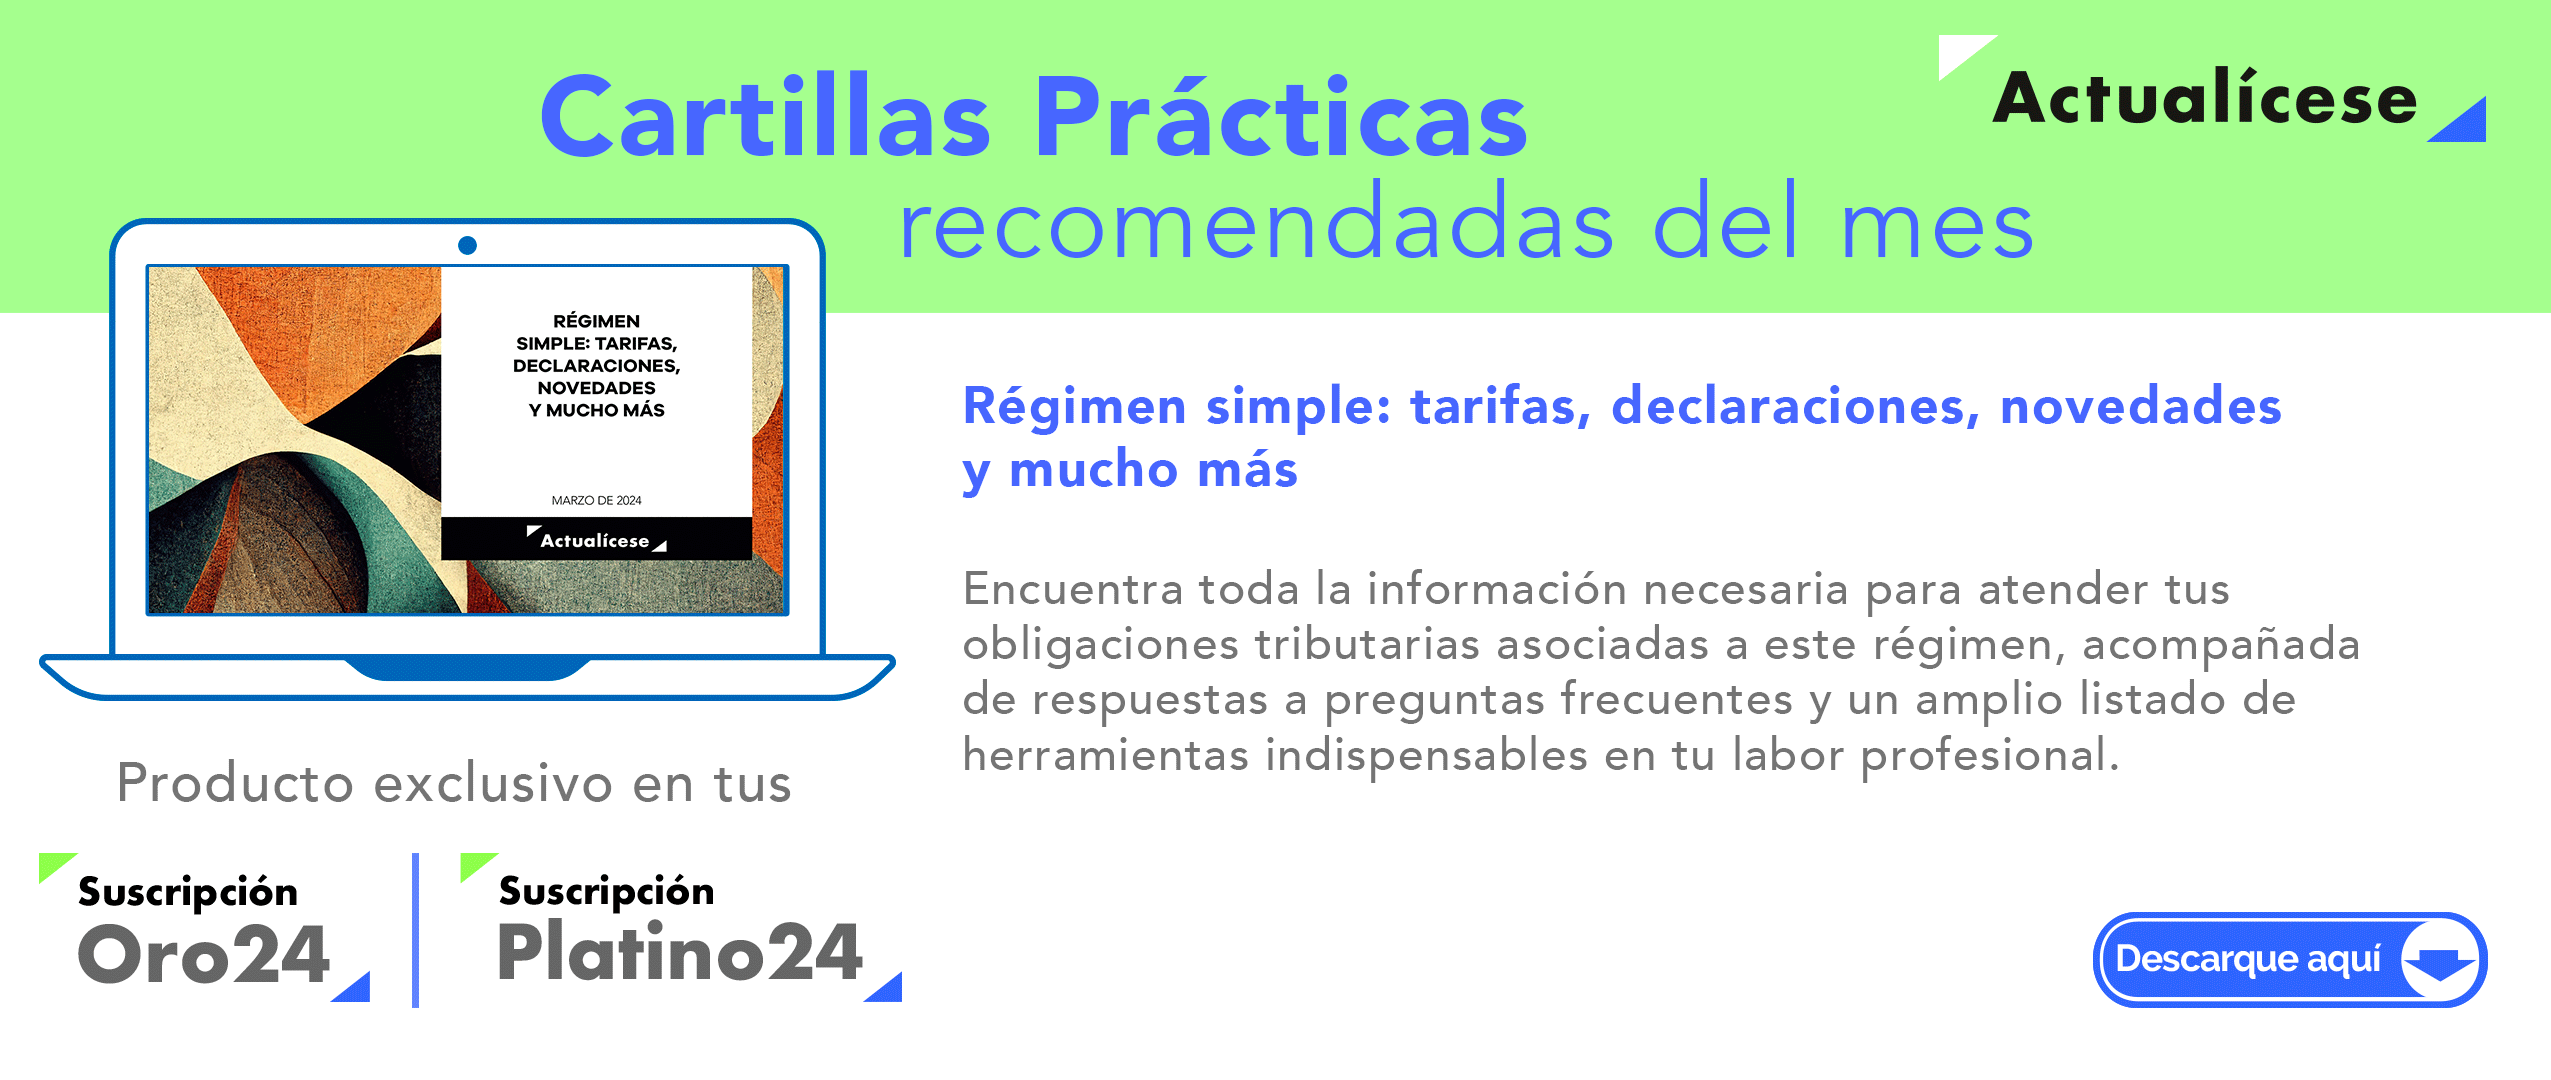 Cartilla-practica-recomendada-1-3.png